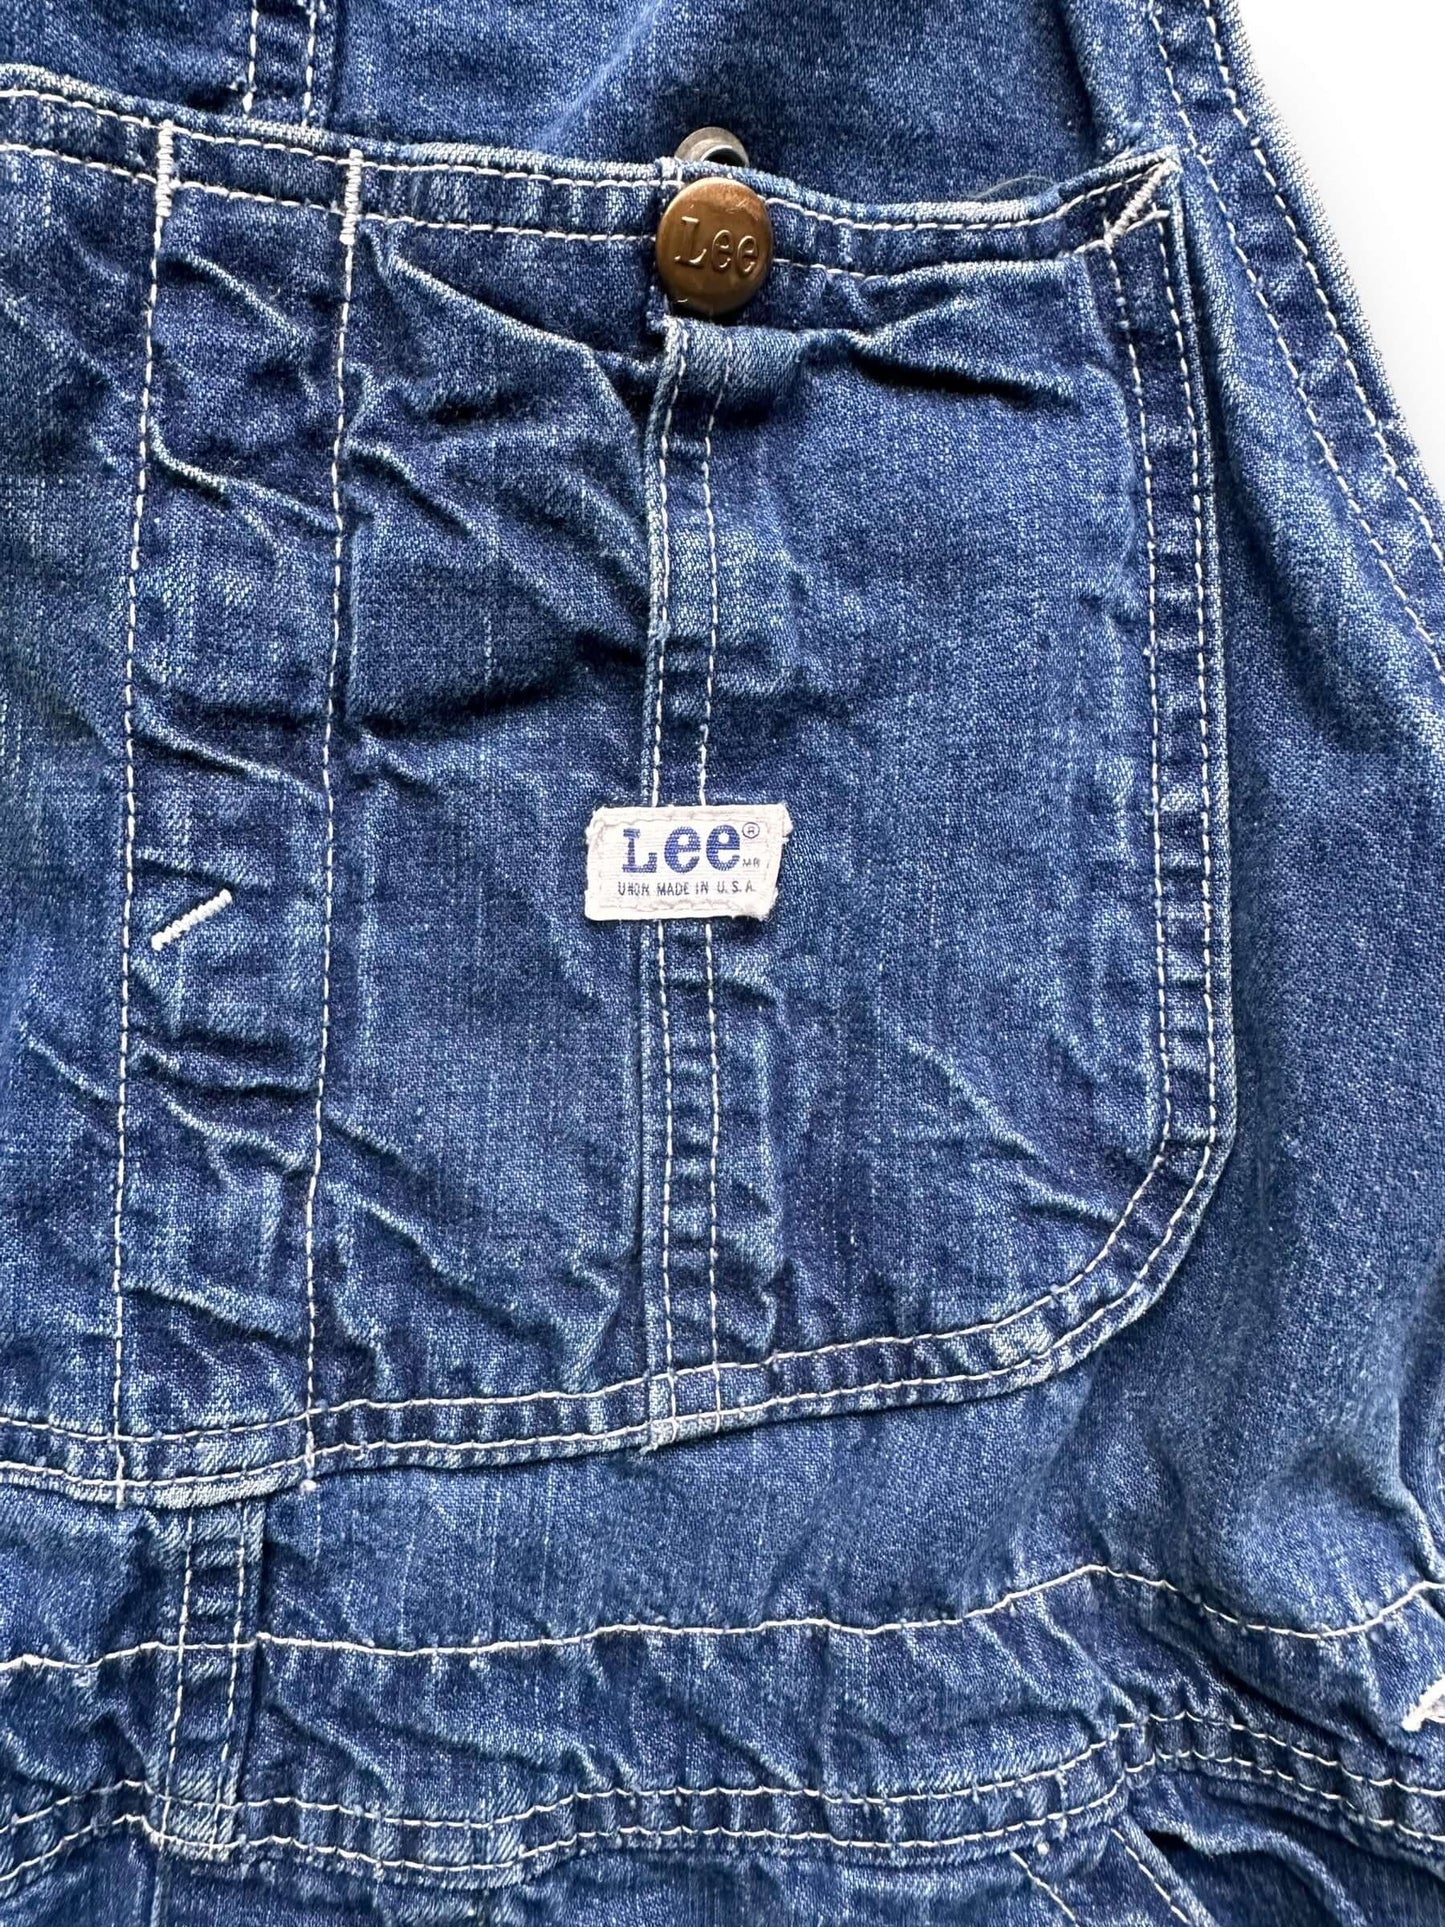 Lee Union Made Tag on 70's Era Lee Jelt Denim Overalls | Vintage Denim Workwear Seattle | Seattle Vintage Denim